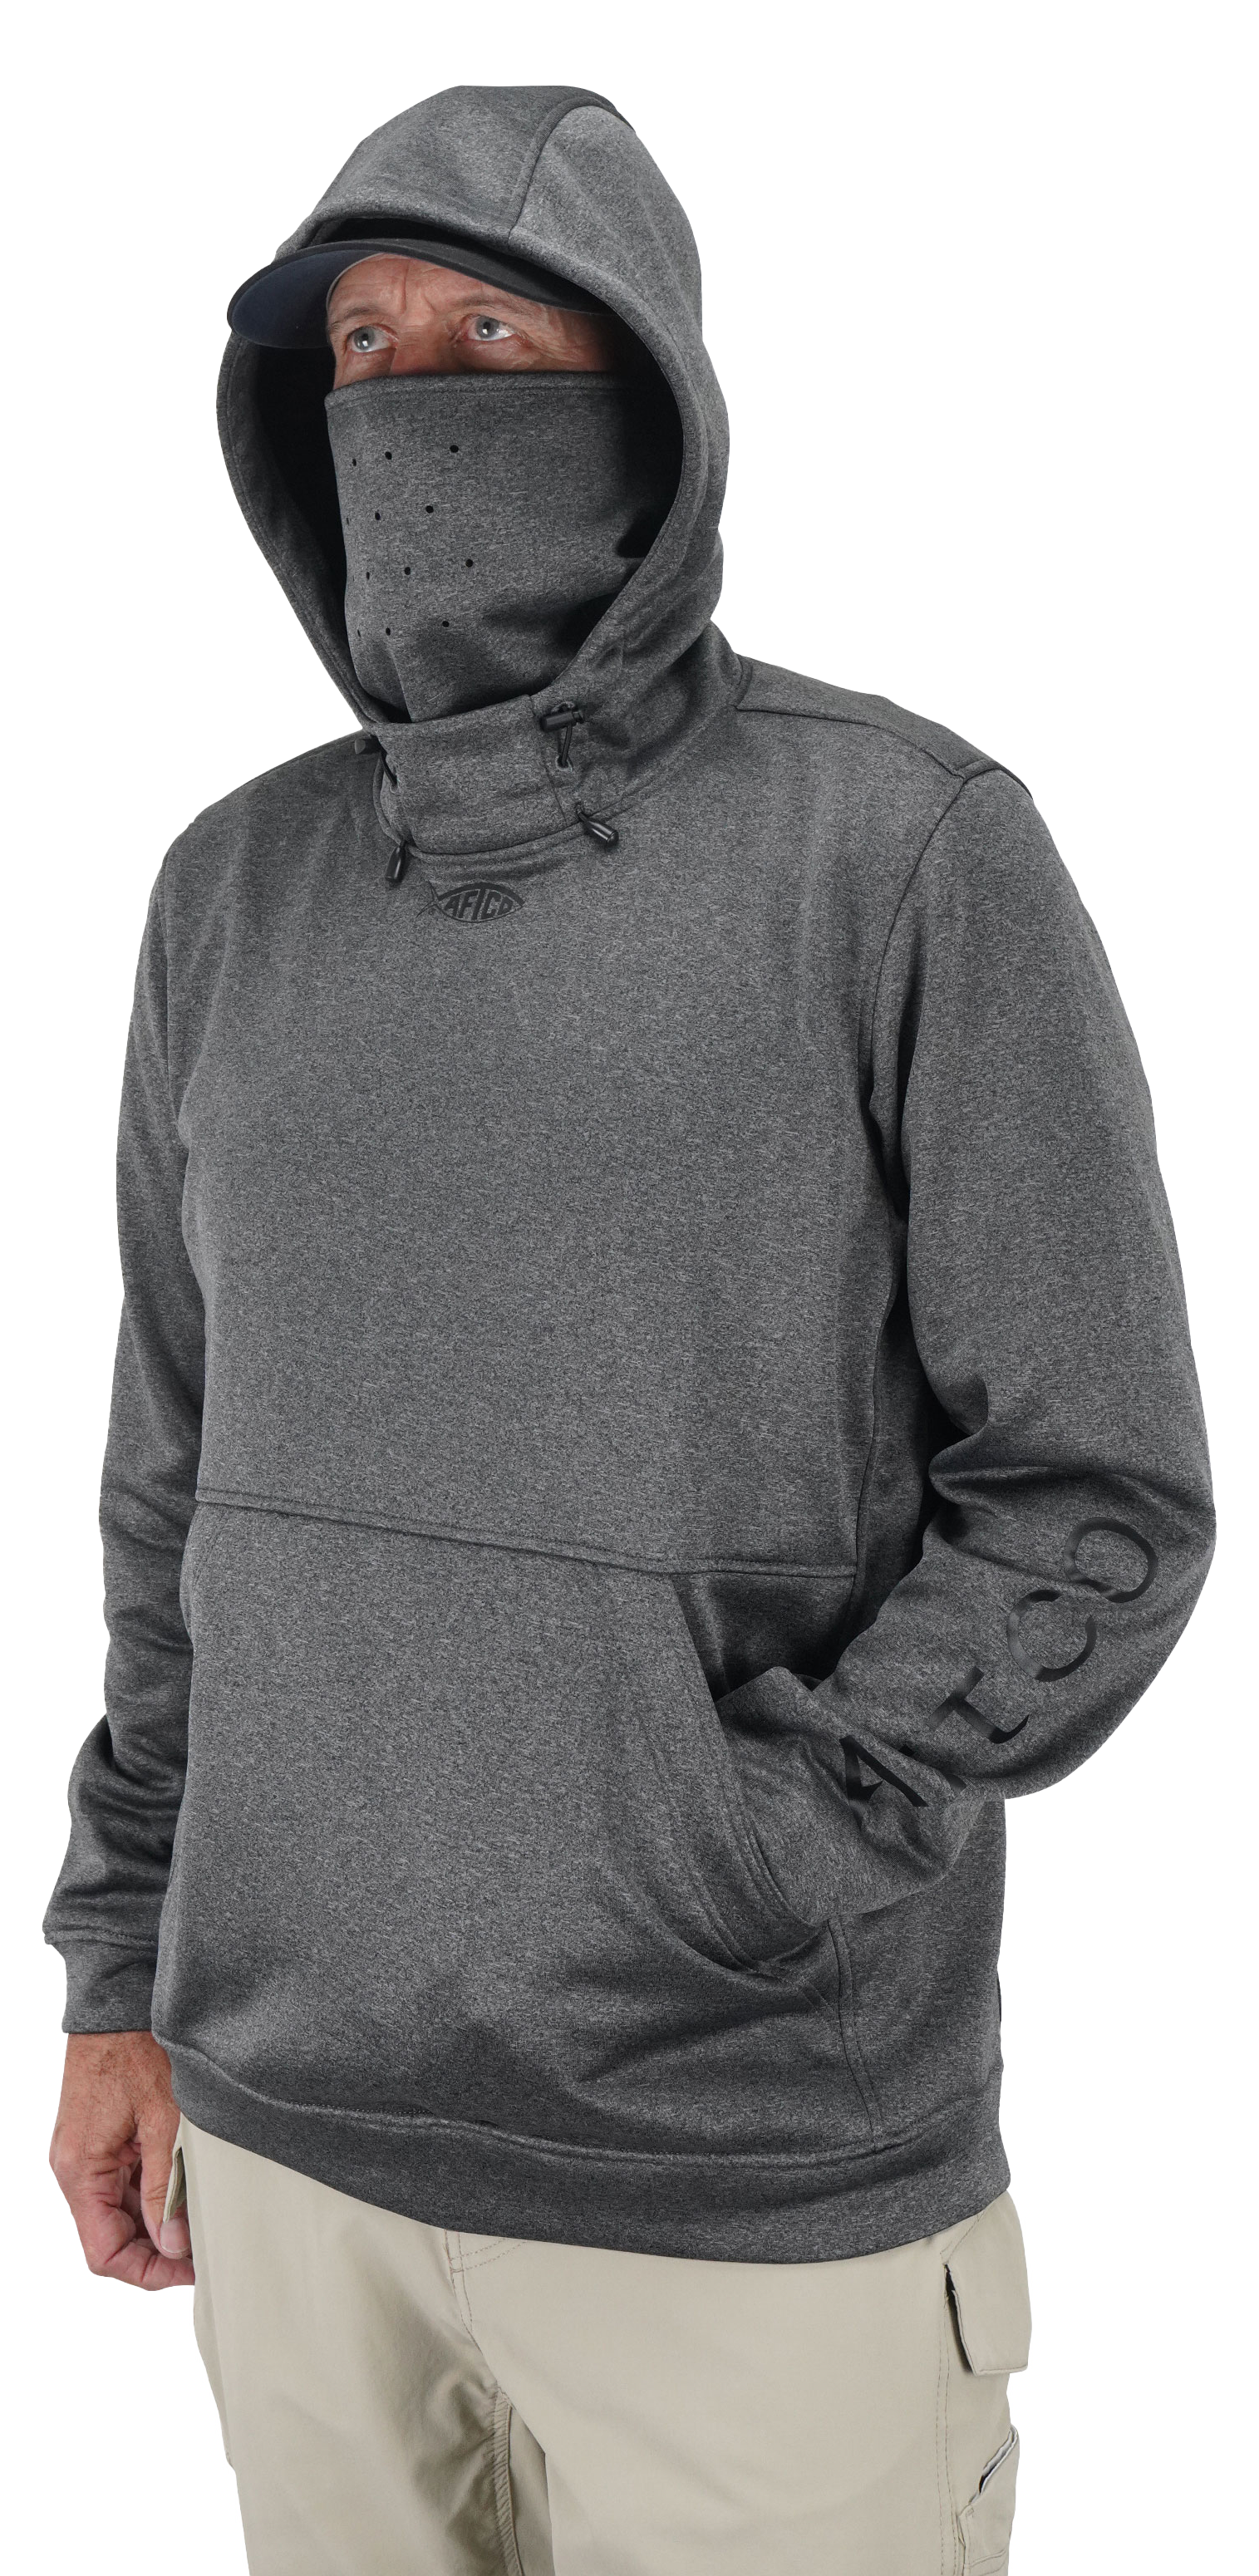 AFTCO Reaper Technical Sweatshirt - Charcoal Heather - M